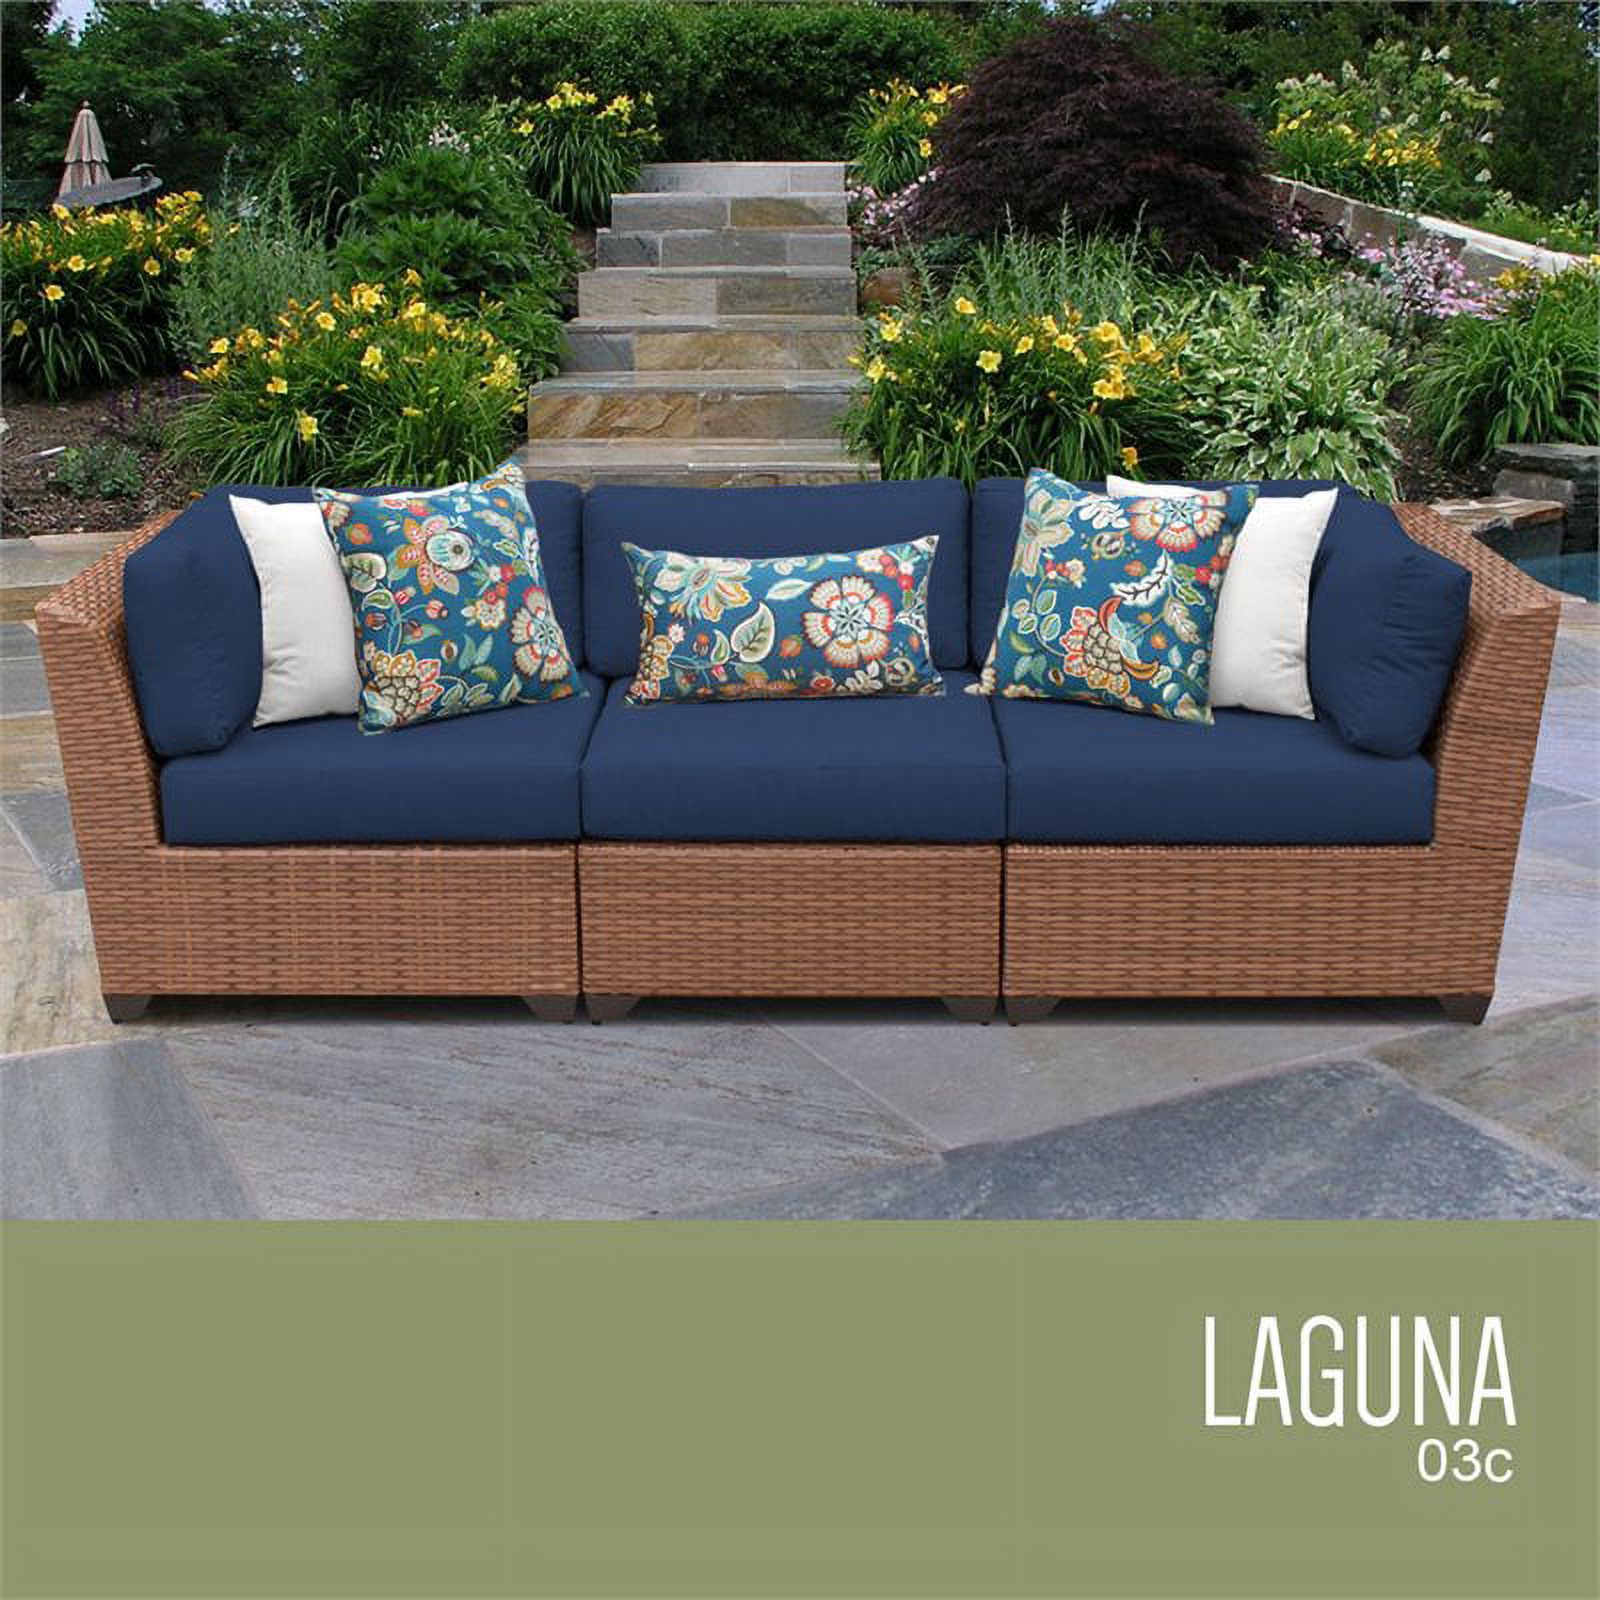 TK Classics Laguna 3-Piece Wicker Patio Sofa in Blue - image 1 of 6